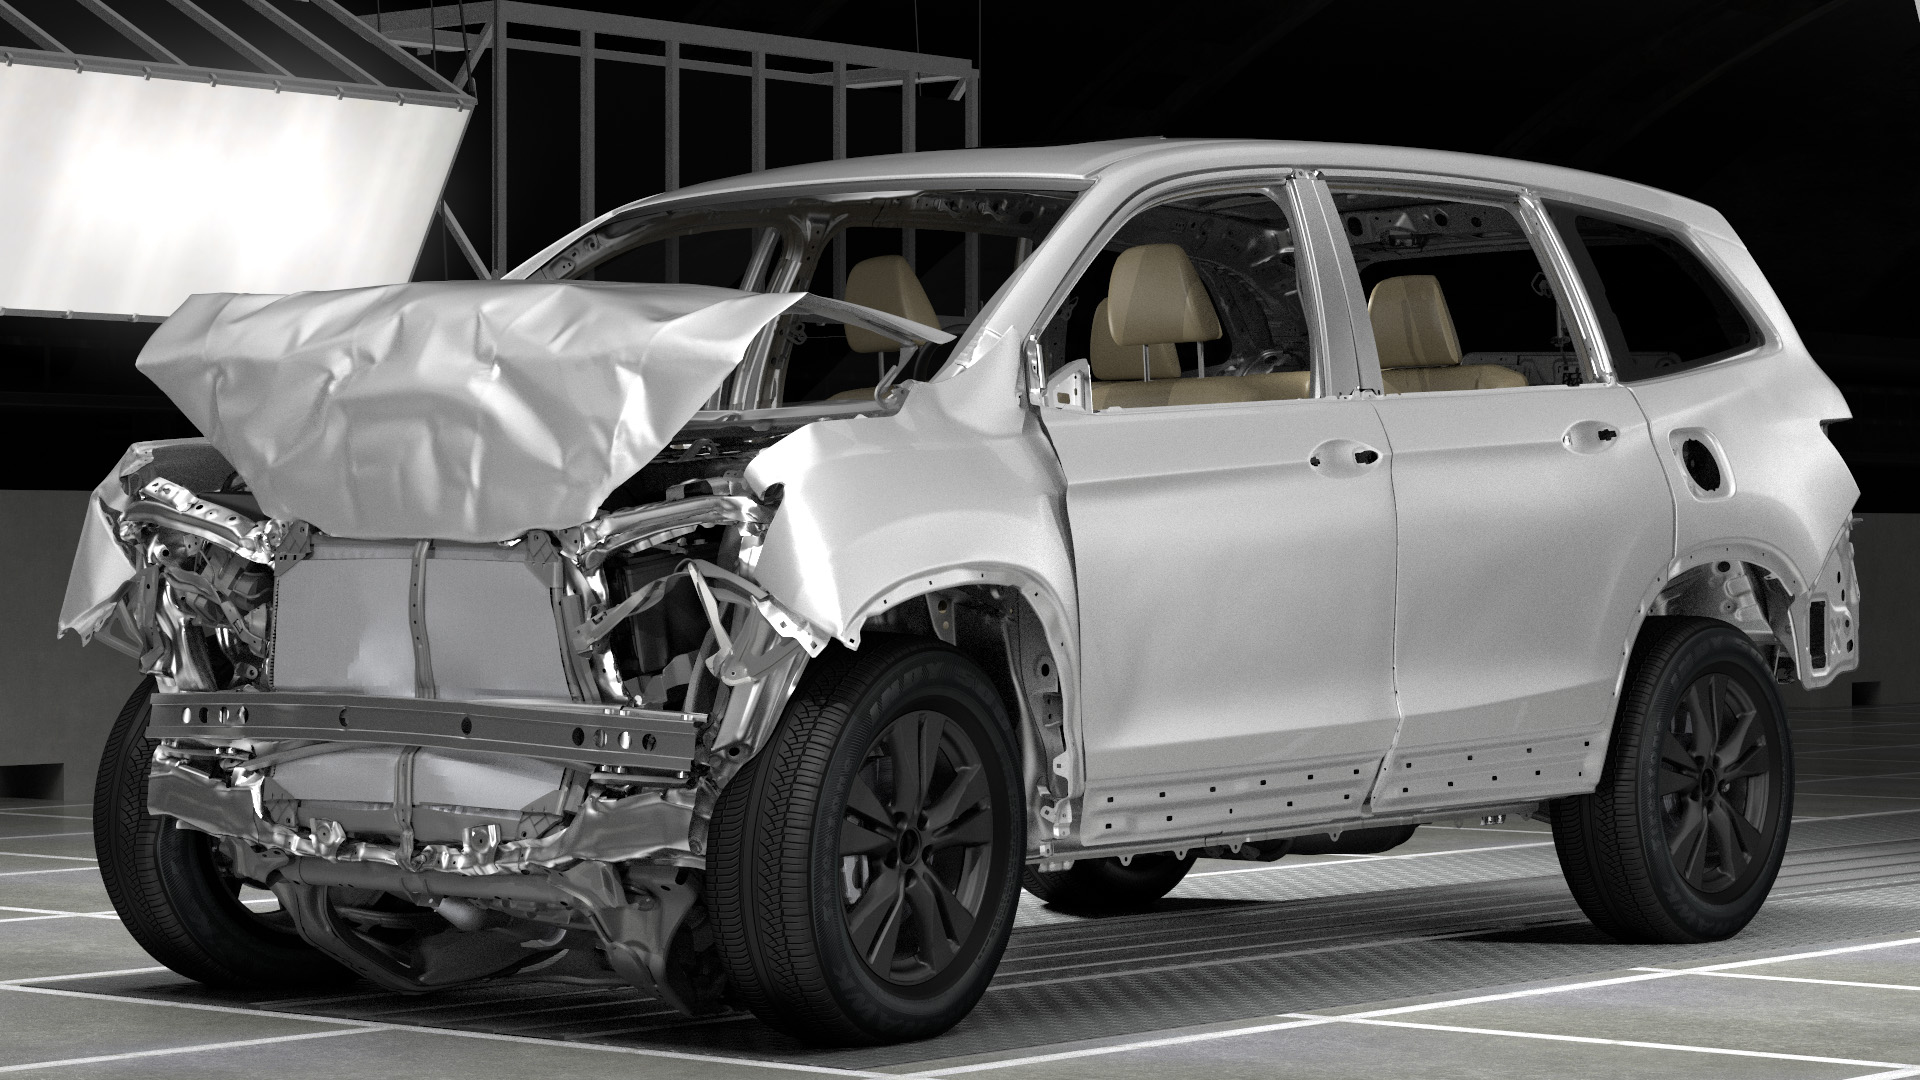 Utilizing the Real Impact crash visualization software co-developed by Honda, the company simulates NHTSA NCAP testing for the 2016 Honda Pilot.